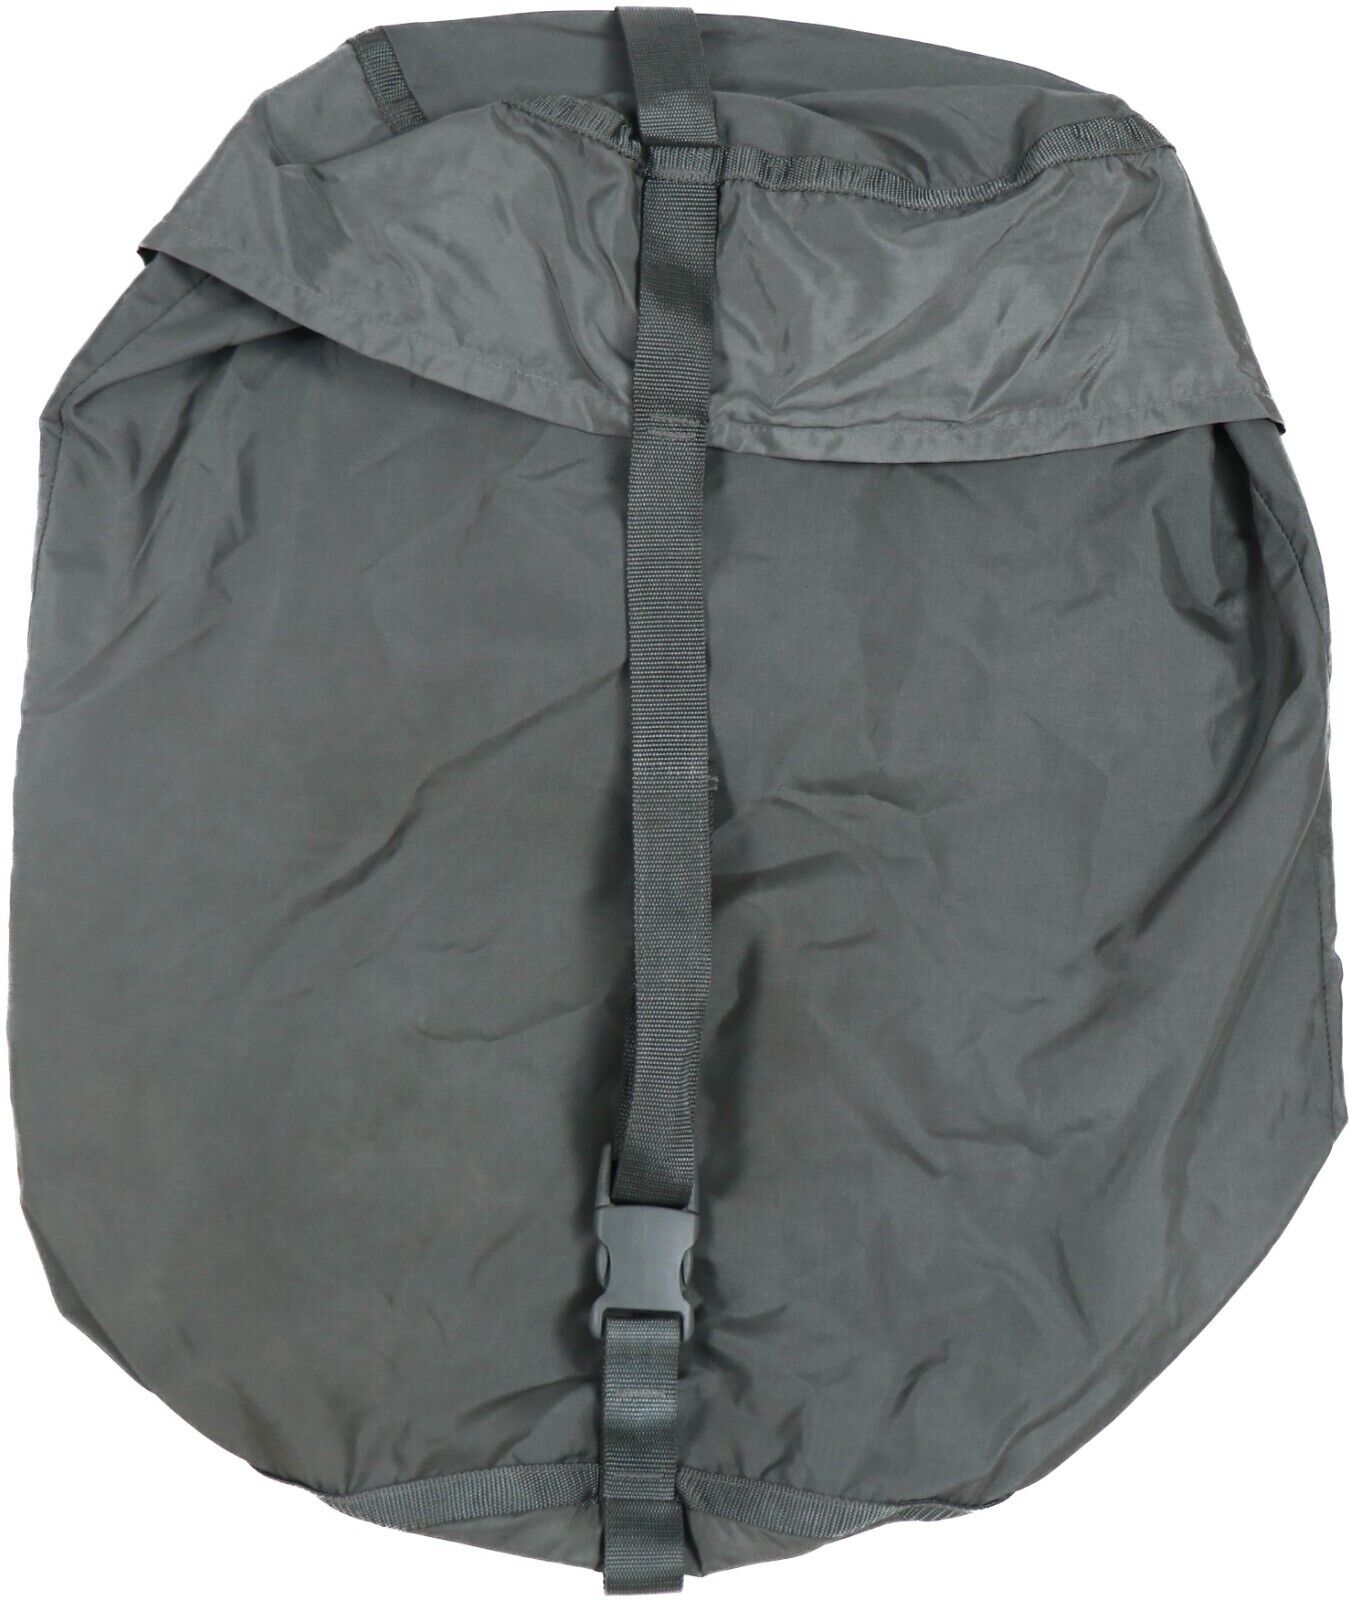 NEW Small - Foliage Green Compression Stuff Sack Modular Sleeping Bag MSS Pack